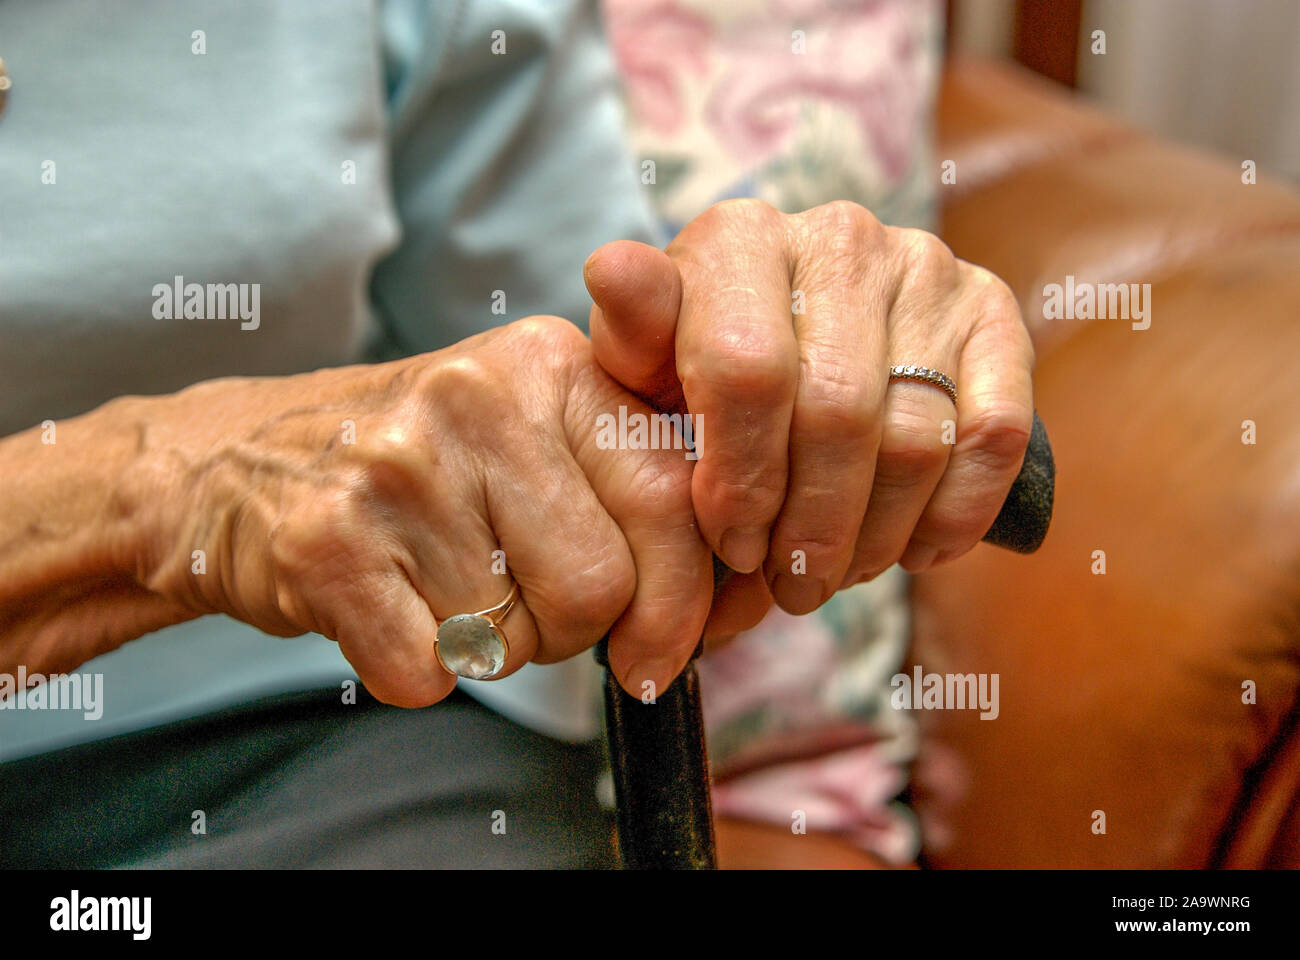 Hands of an elderly woman holding a walking stick Stock Photo